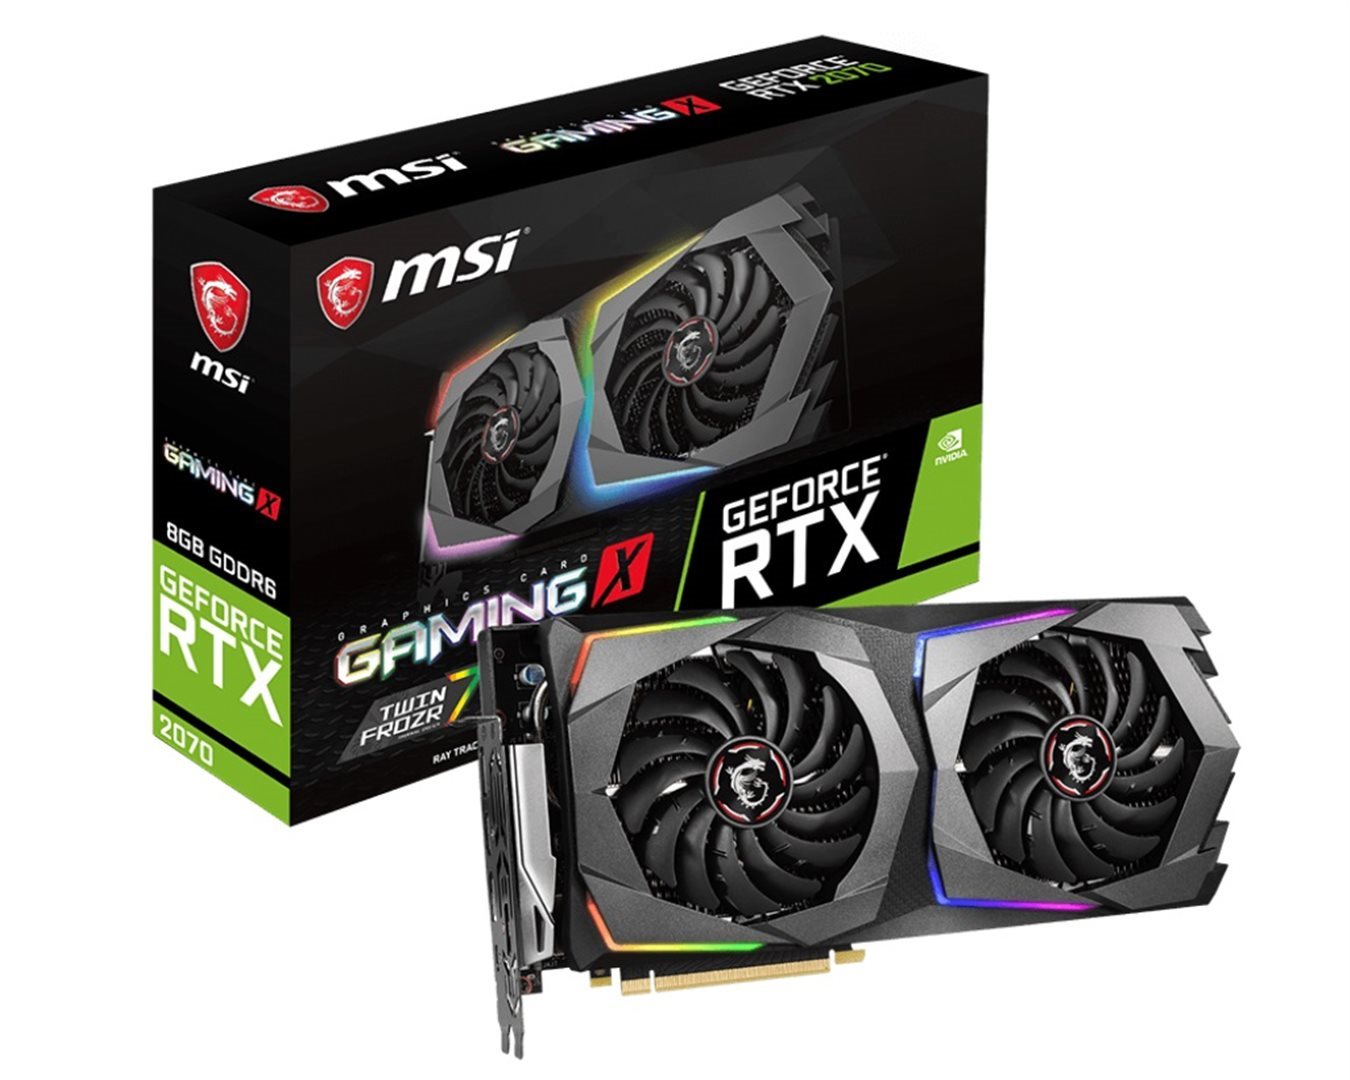 MSI GeForce RTX 2070 GAMING X 8G